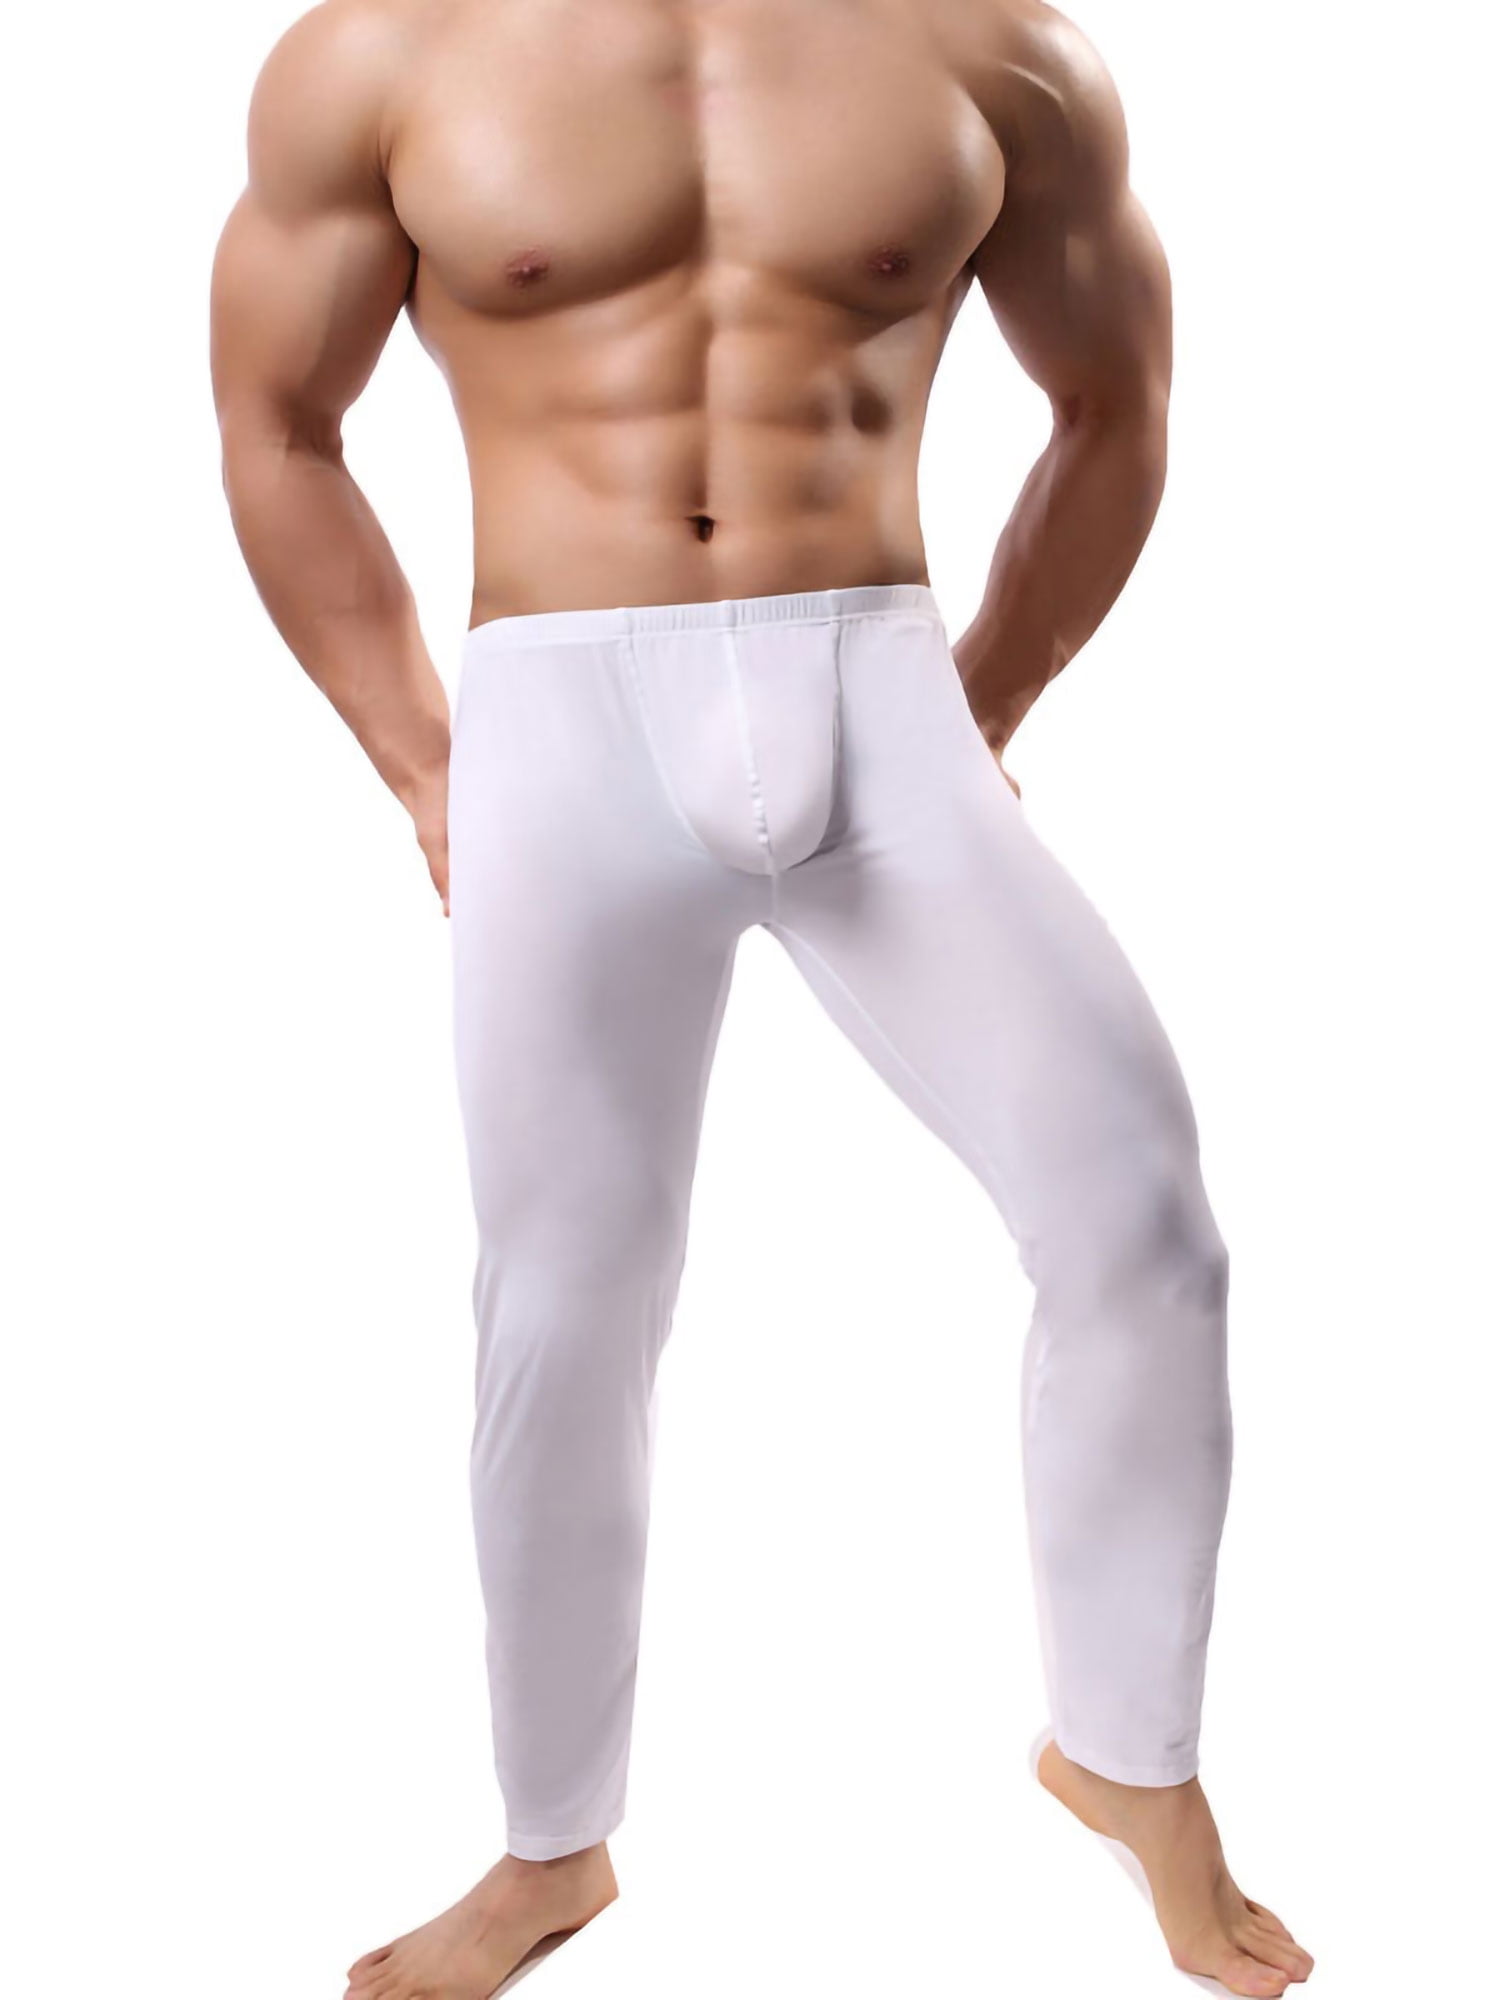 Plus size Thermal Pants Underwear Long Johns Bottoms Pouch Base Layer Underpants 